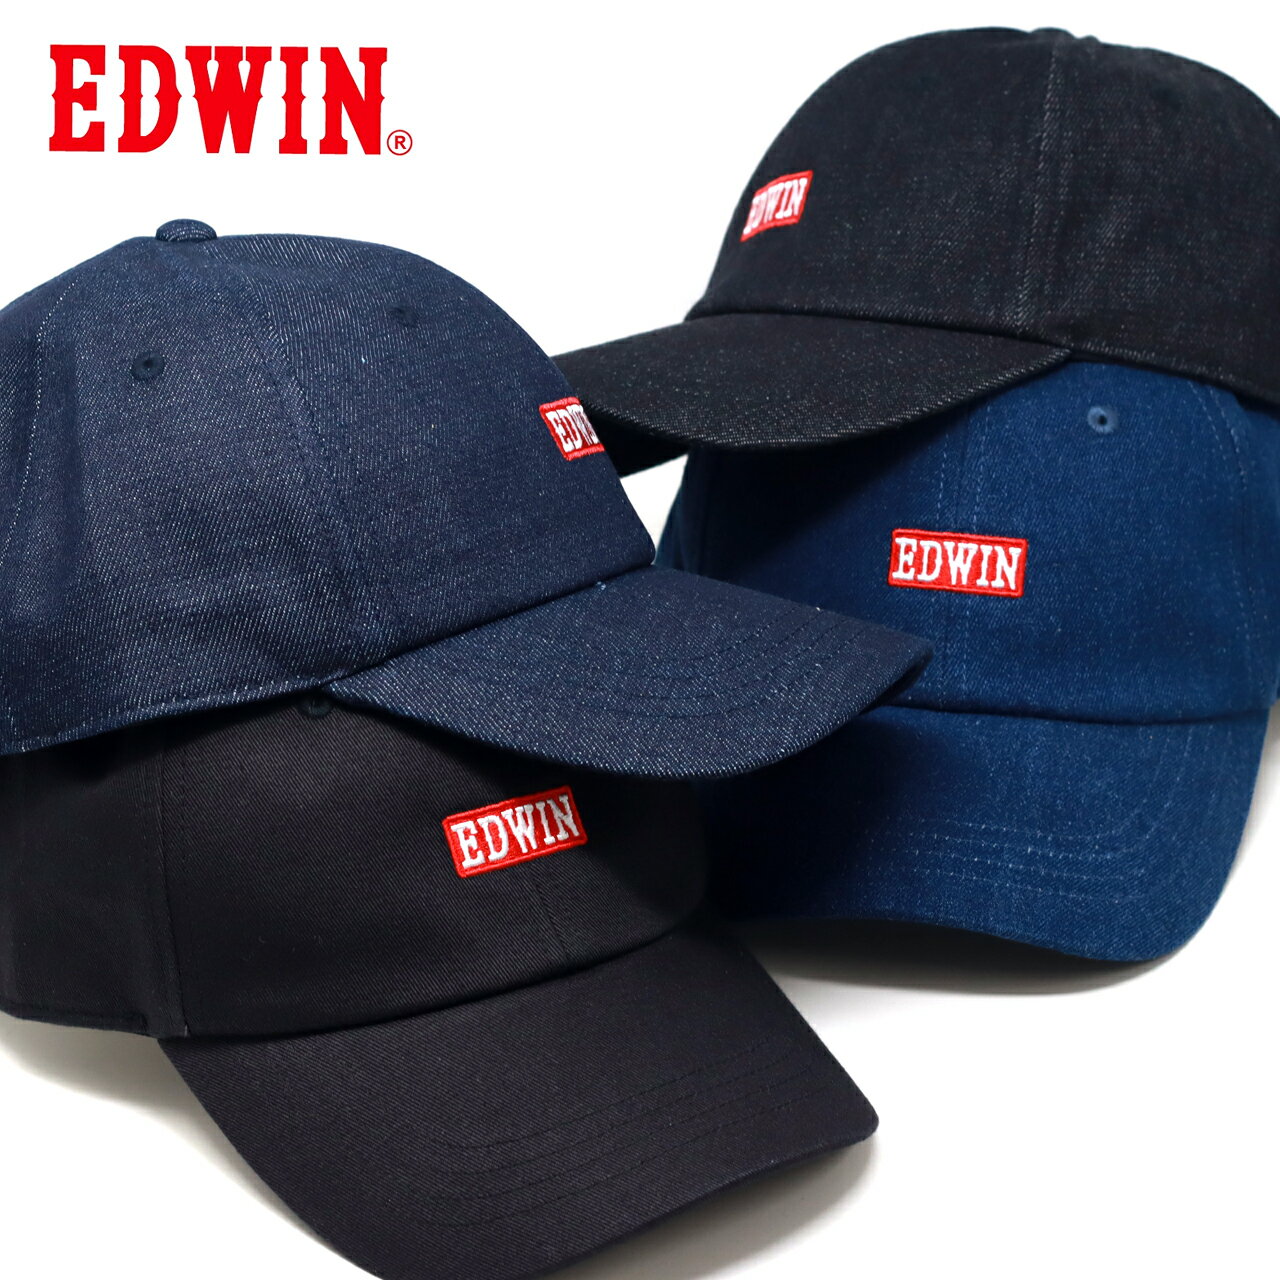 EDWIN デニムキャップ メンズ エドウィン 帽子 メンズ キャップ メンズ エドウィン ジーンズ ベースボールキャップ ボックスロゴ 6パネル サイズ調節可 全3色 父の日 ギフト プレゼント ギフト包装無料 敬老の日 